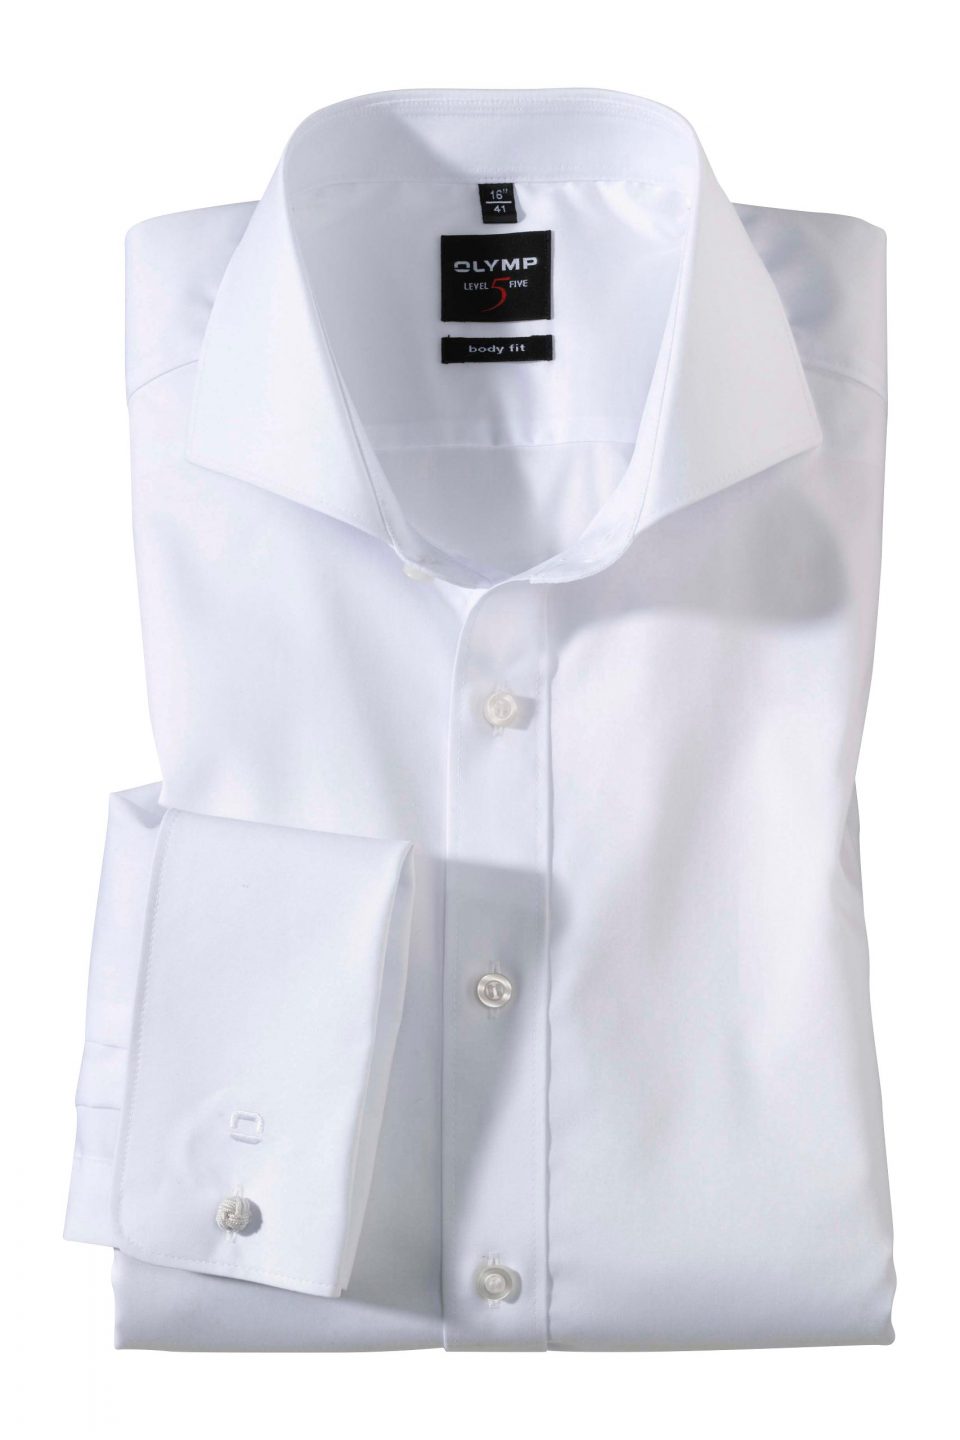 Olymp White Slim-Fit Cut Away Collar Shirt